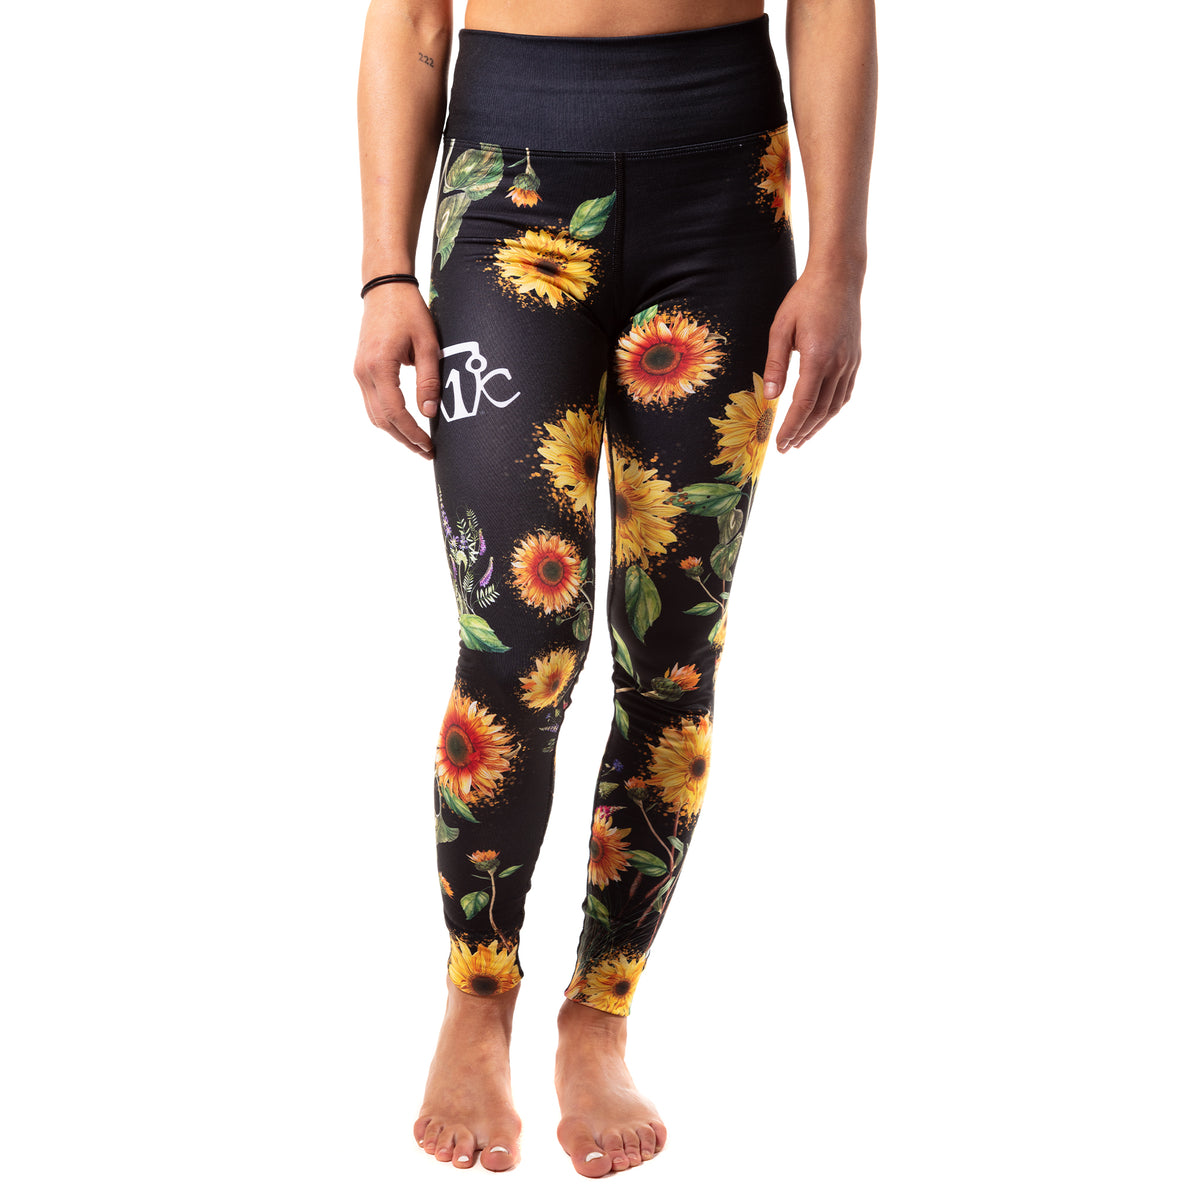 KLL Colorful Sunflowers Leggings and Yoga Pants for Women